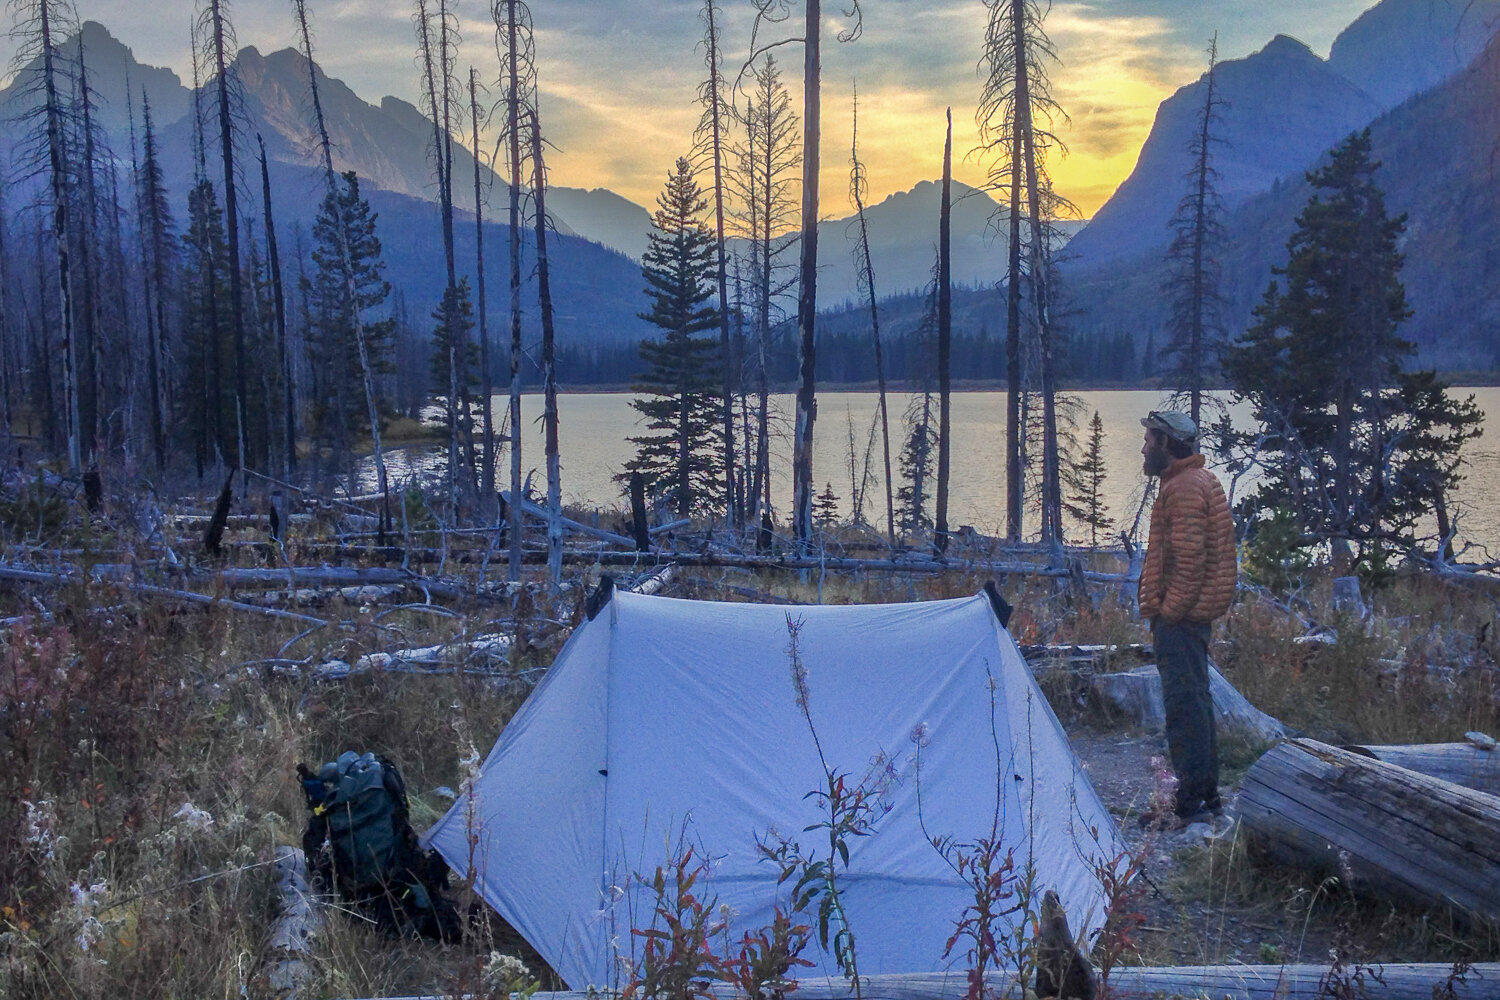 Camping at Red Eagle Lake in Glacier National Park